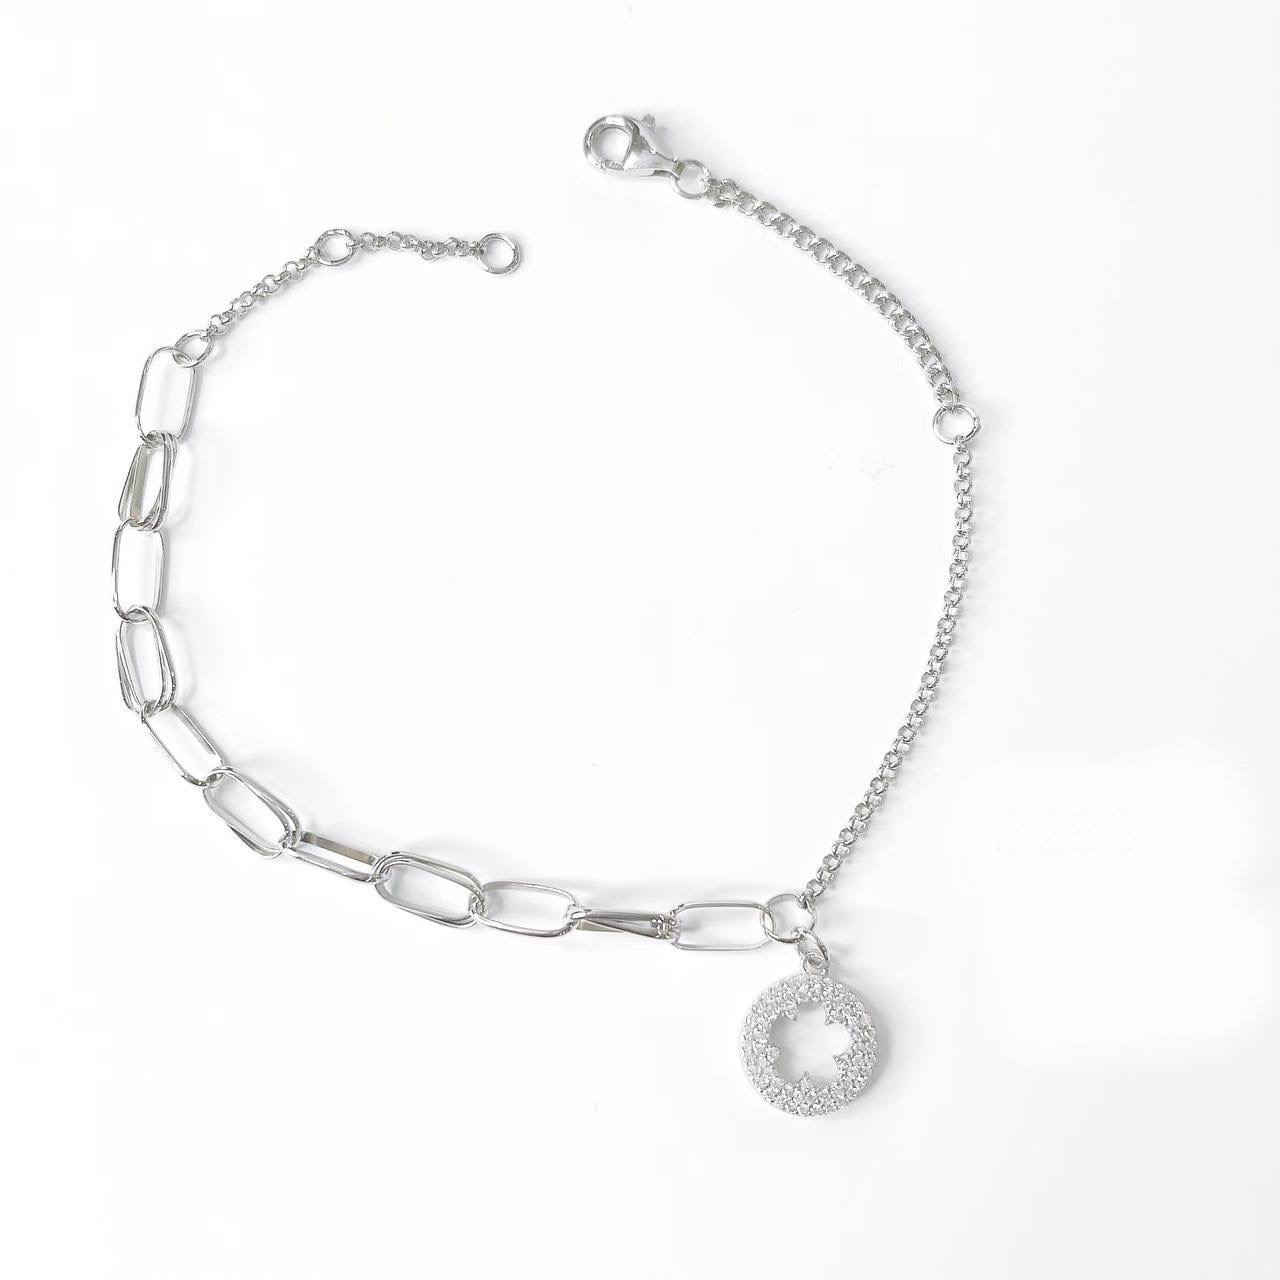 Elegant Silver 925 Bracelet Studded with Sparkling Zircon Stones